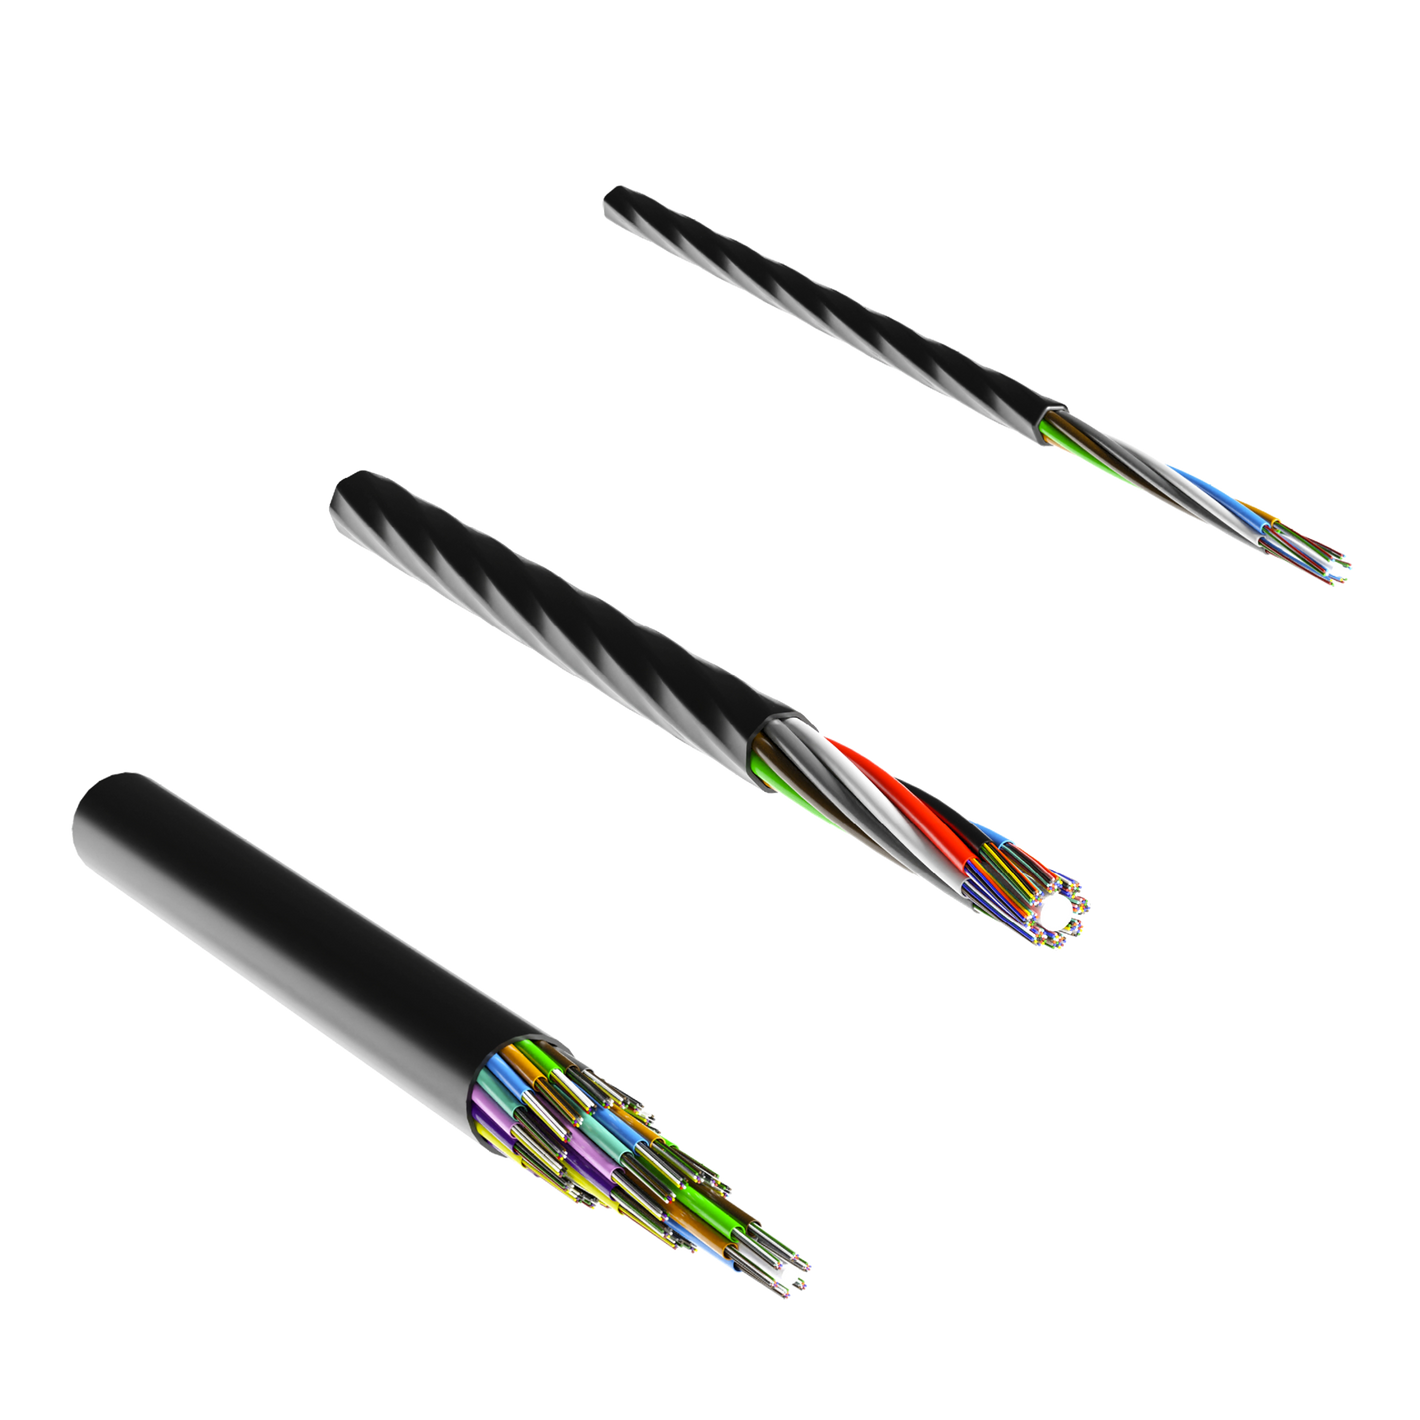 Hexatronic Viper Micro Cable - High Performance Micro Cable – Super Slim 12-864 fibers G657A1 200 µm TIA598